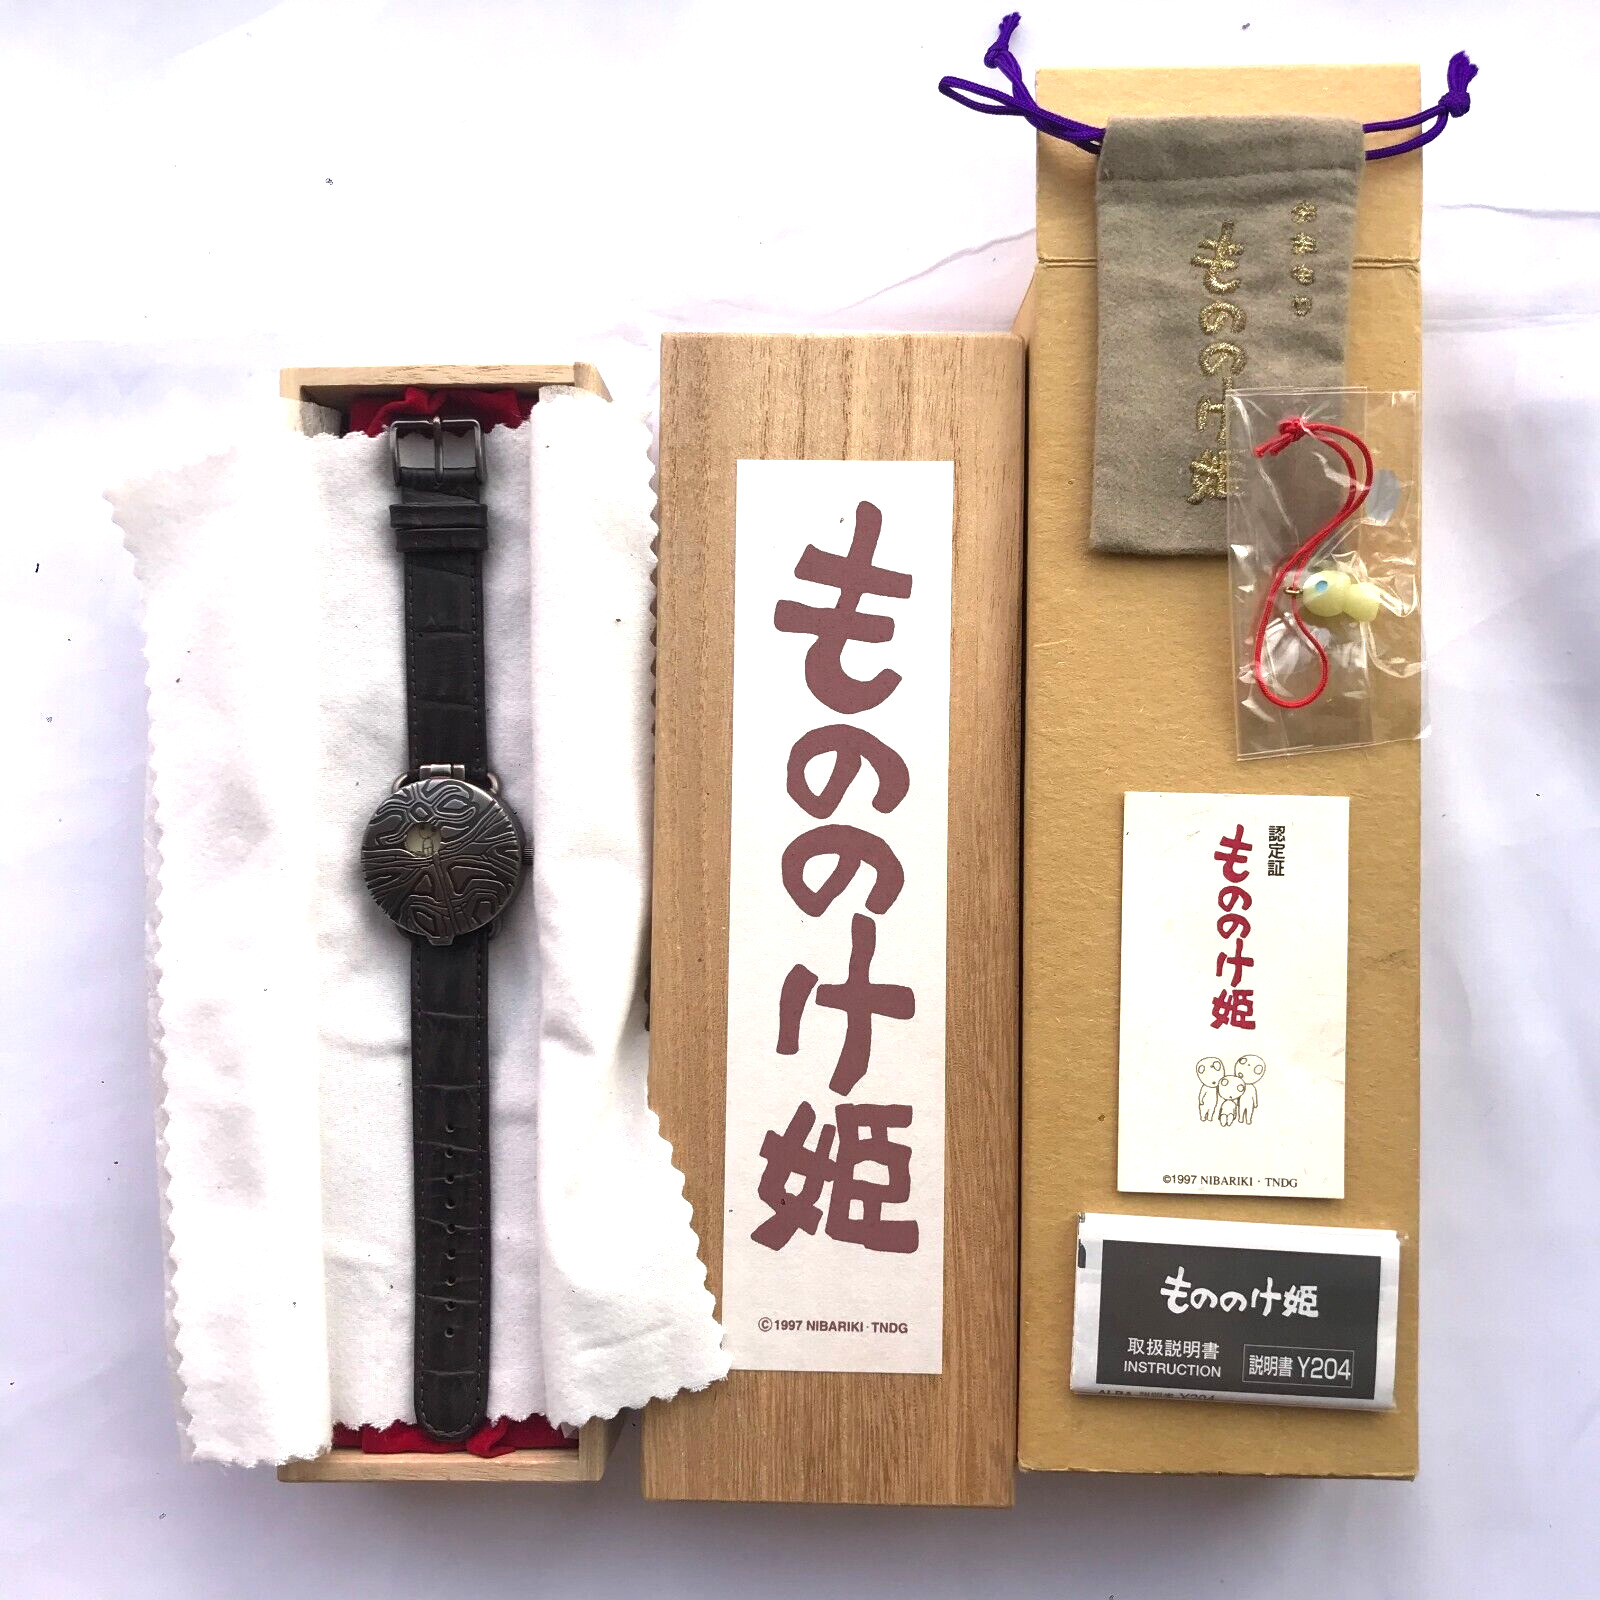 Princess Mononoke Kodama Wrist Watch Limited 1500 ALBA Studio Ghibli 1999 JP